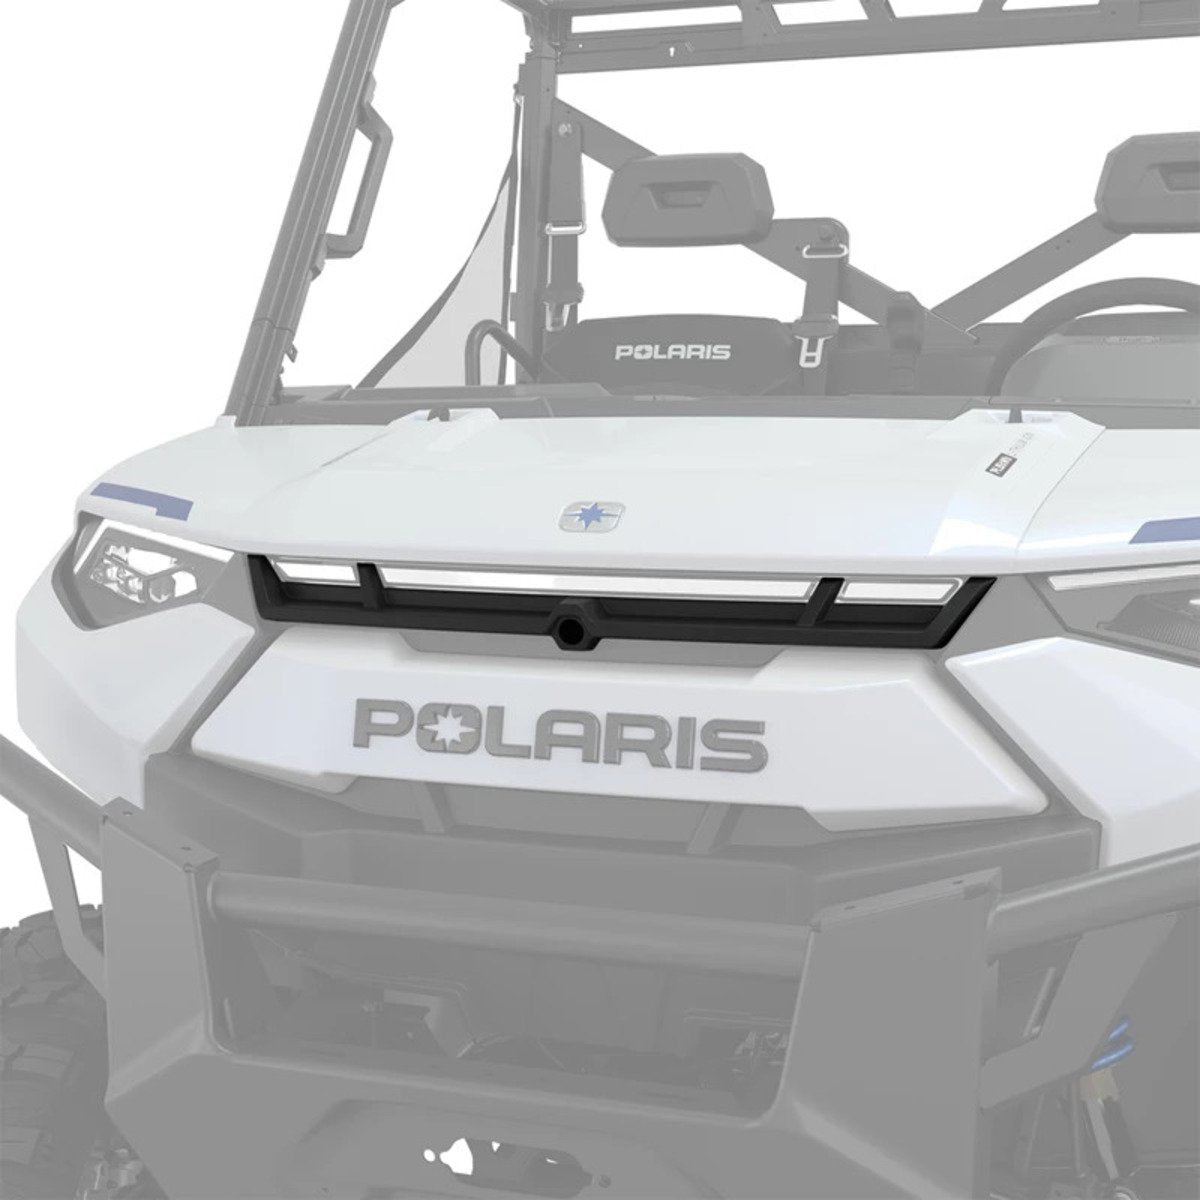 Polaris Ranger Ride Command Front Camera